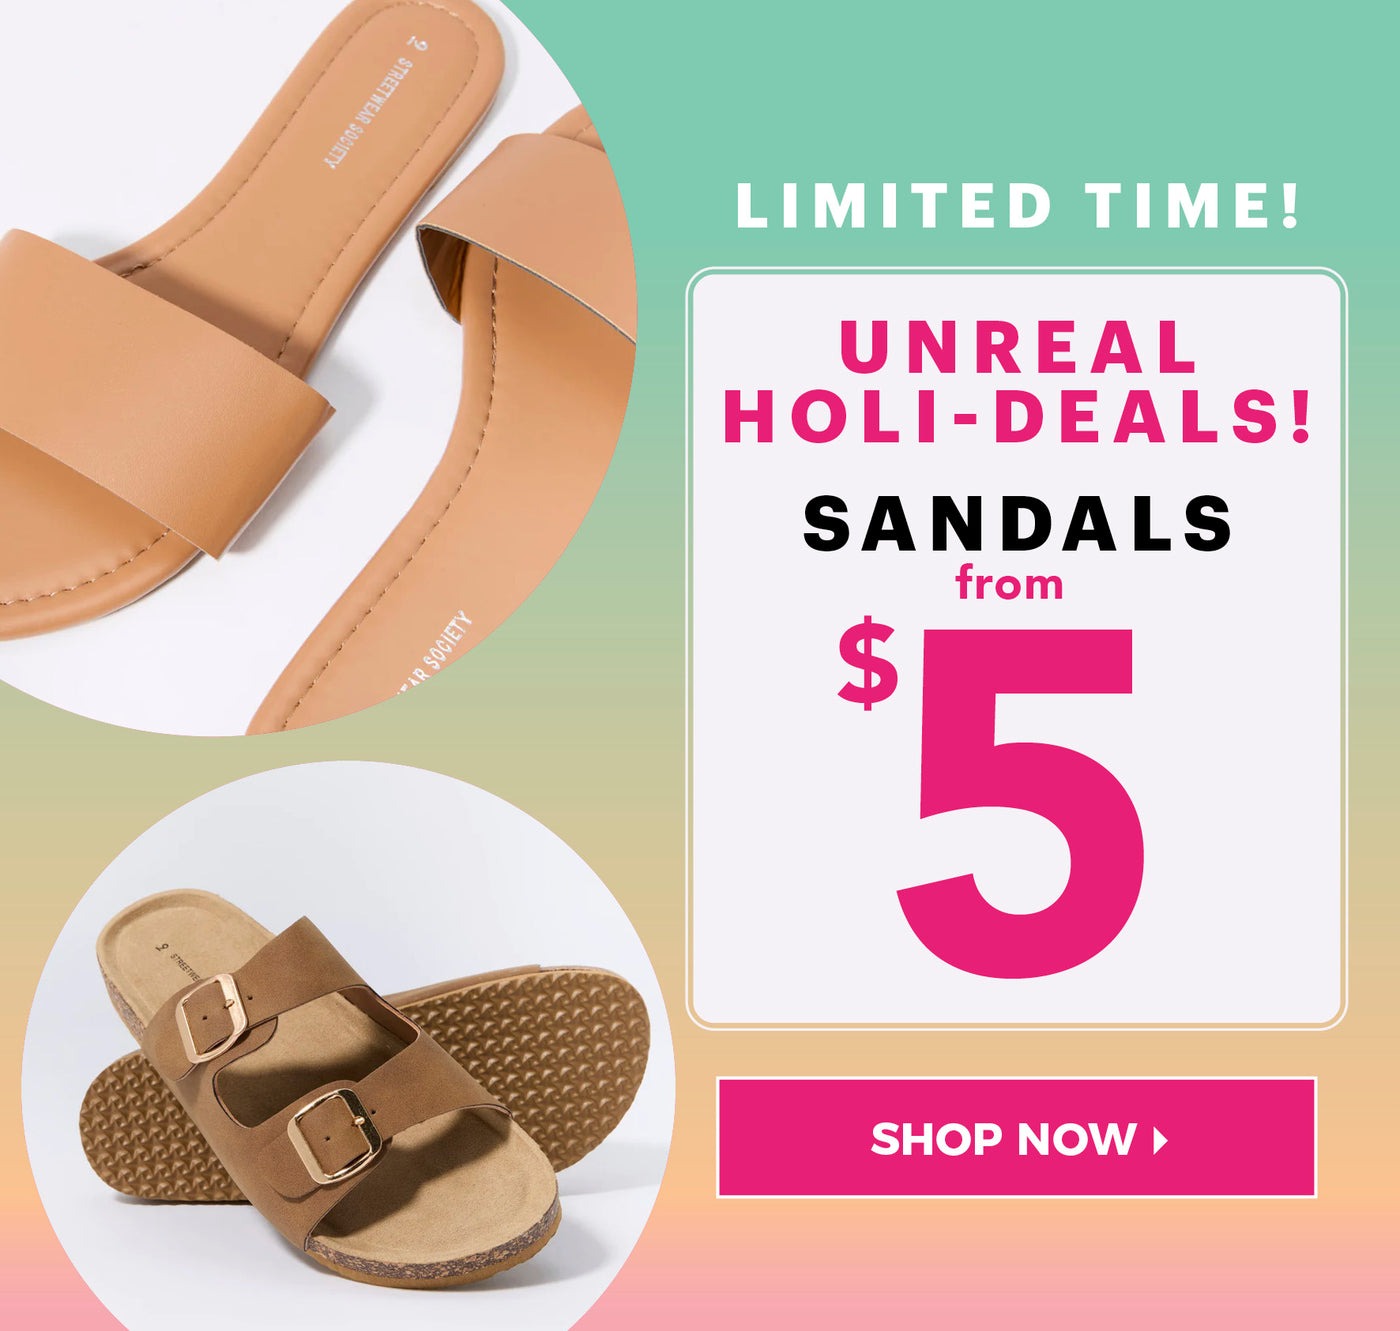 shoes_slides-sandals